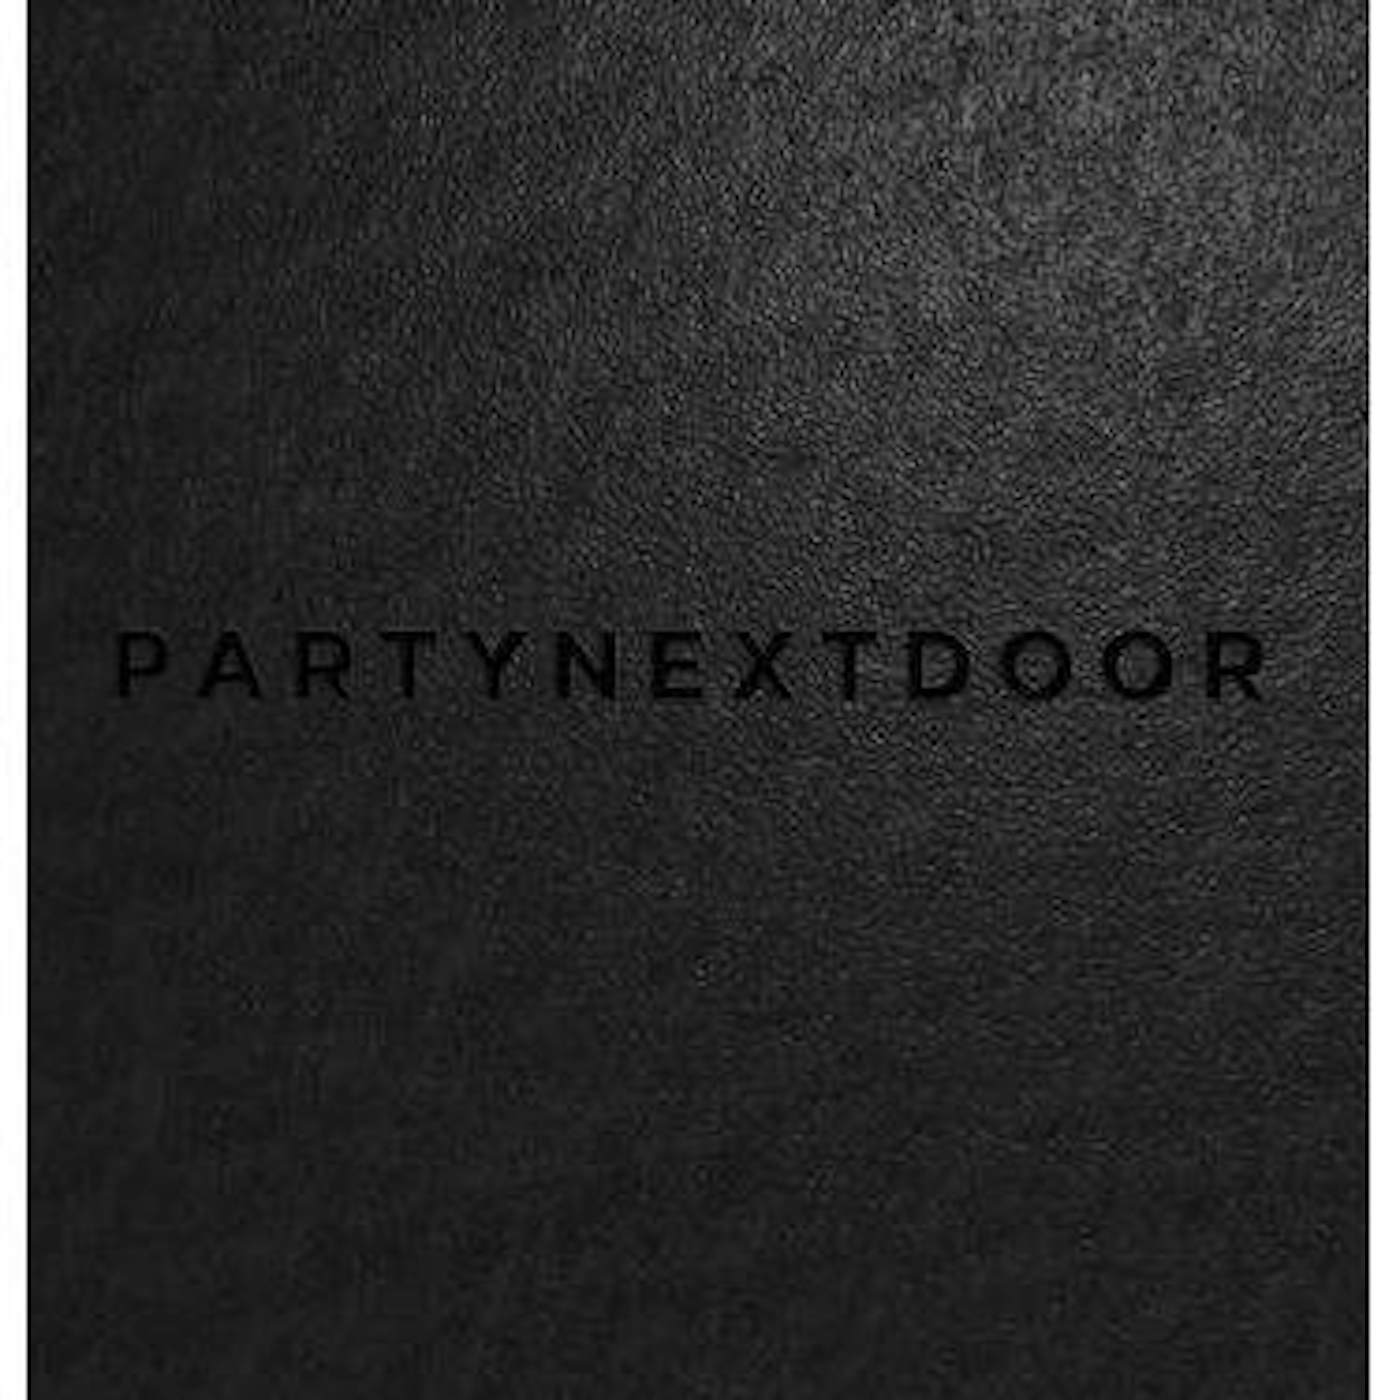 PARTYNEXTDOOR (LIMITED EDITION/6LP BOX SET) (X) (RSD) (Vinyl)